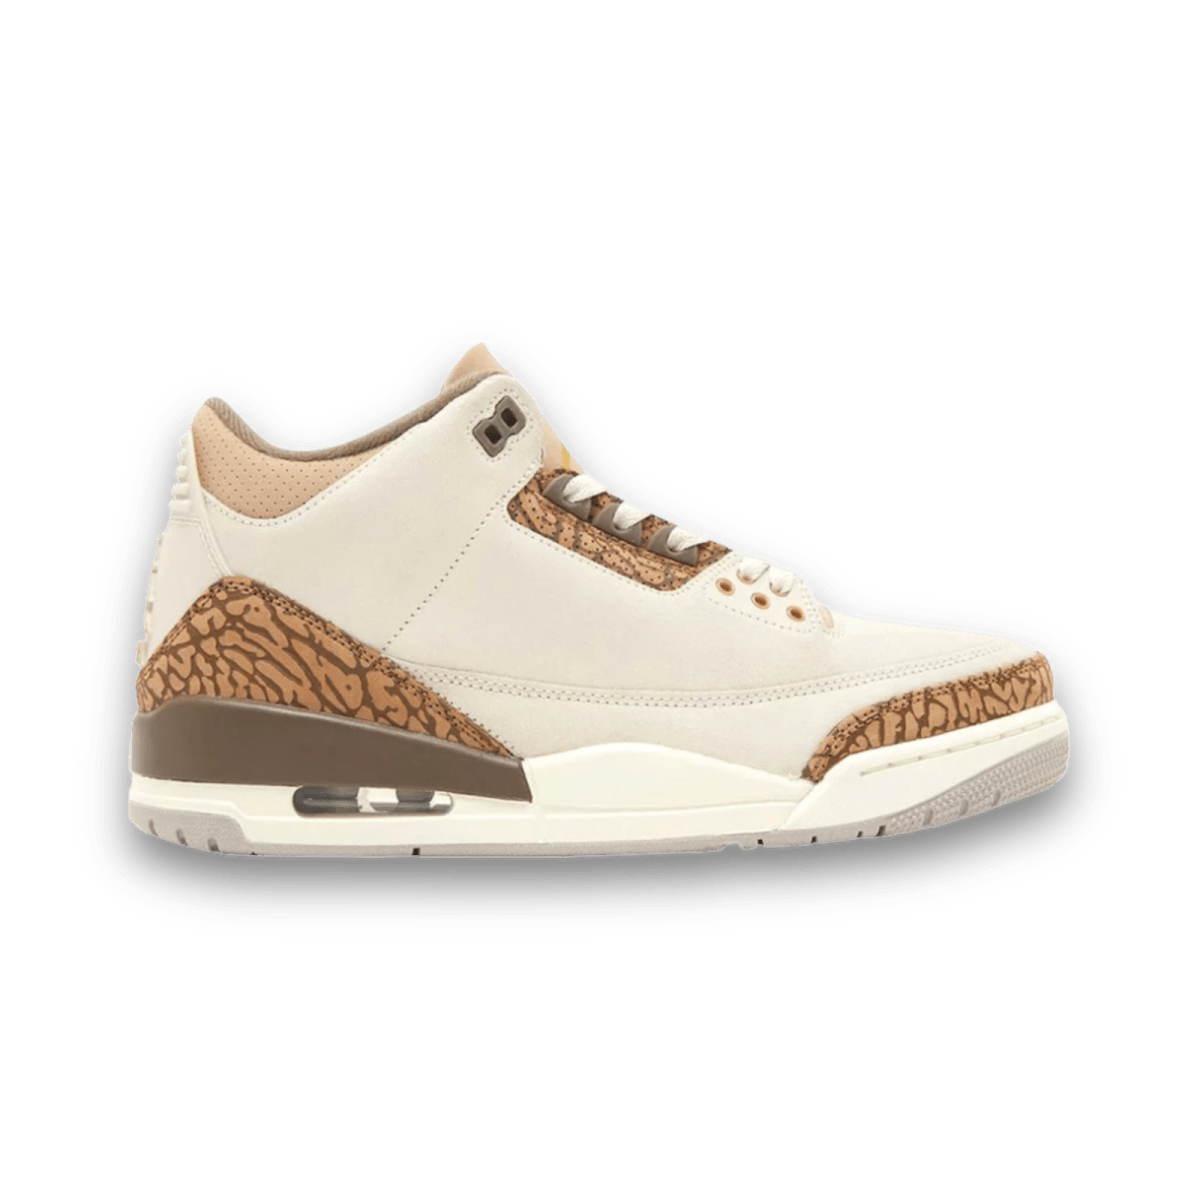 Air Jordan 3 Retro 'Palomino' - Grade School - Mid Sneaker - Jawns on Fire Sneakers & Streetwear